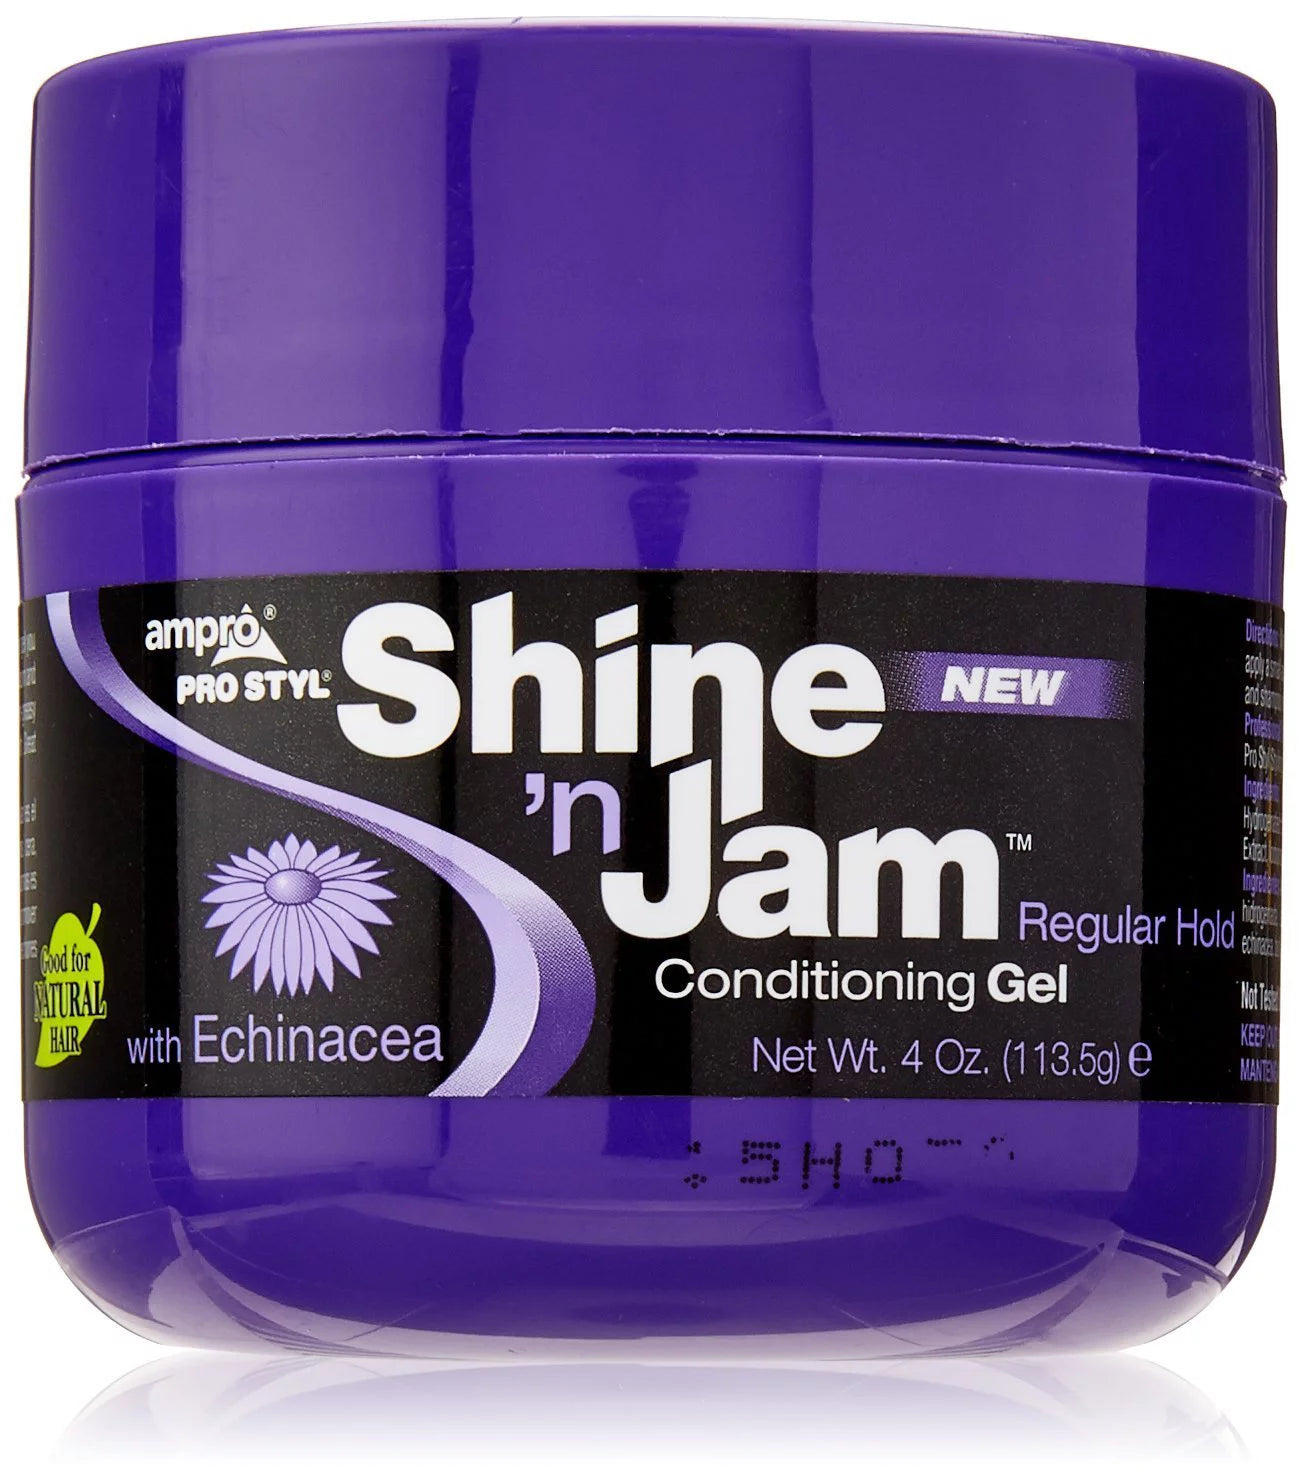 Shine 'n Jam Conditioning Gel, Regular Hold, 8oz